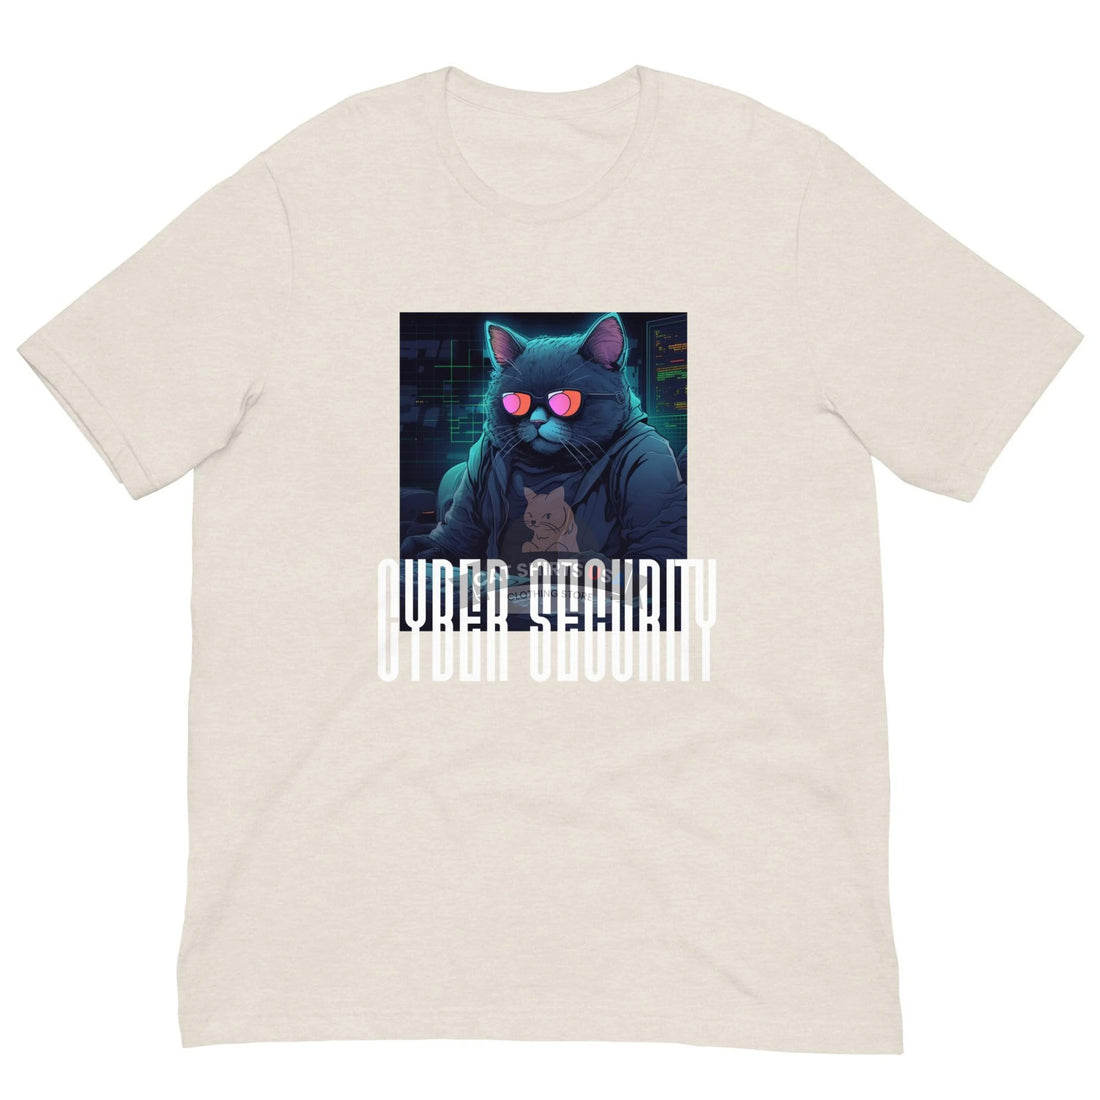 Cyber Security Cat Shirt - Cat Shirts USA